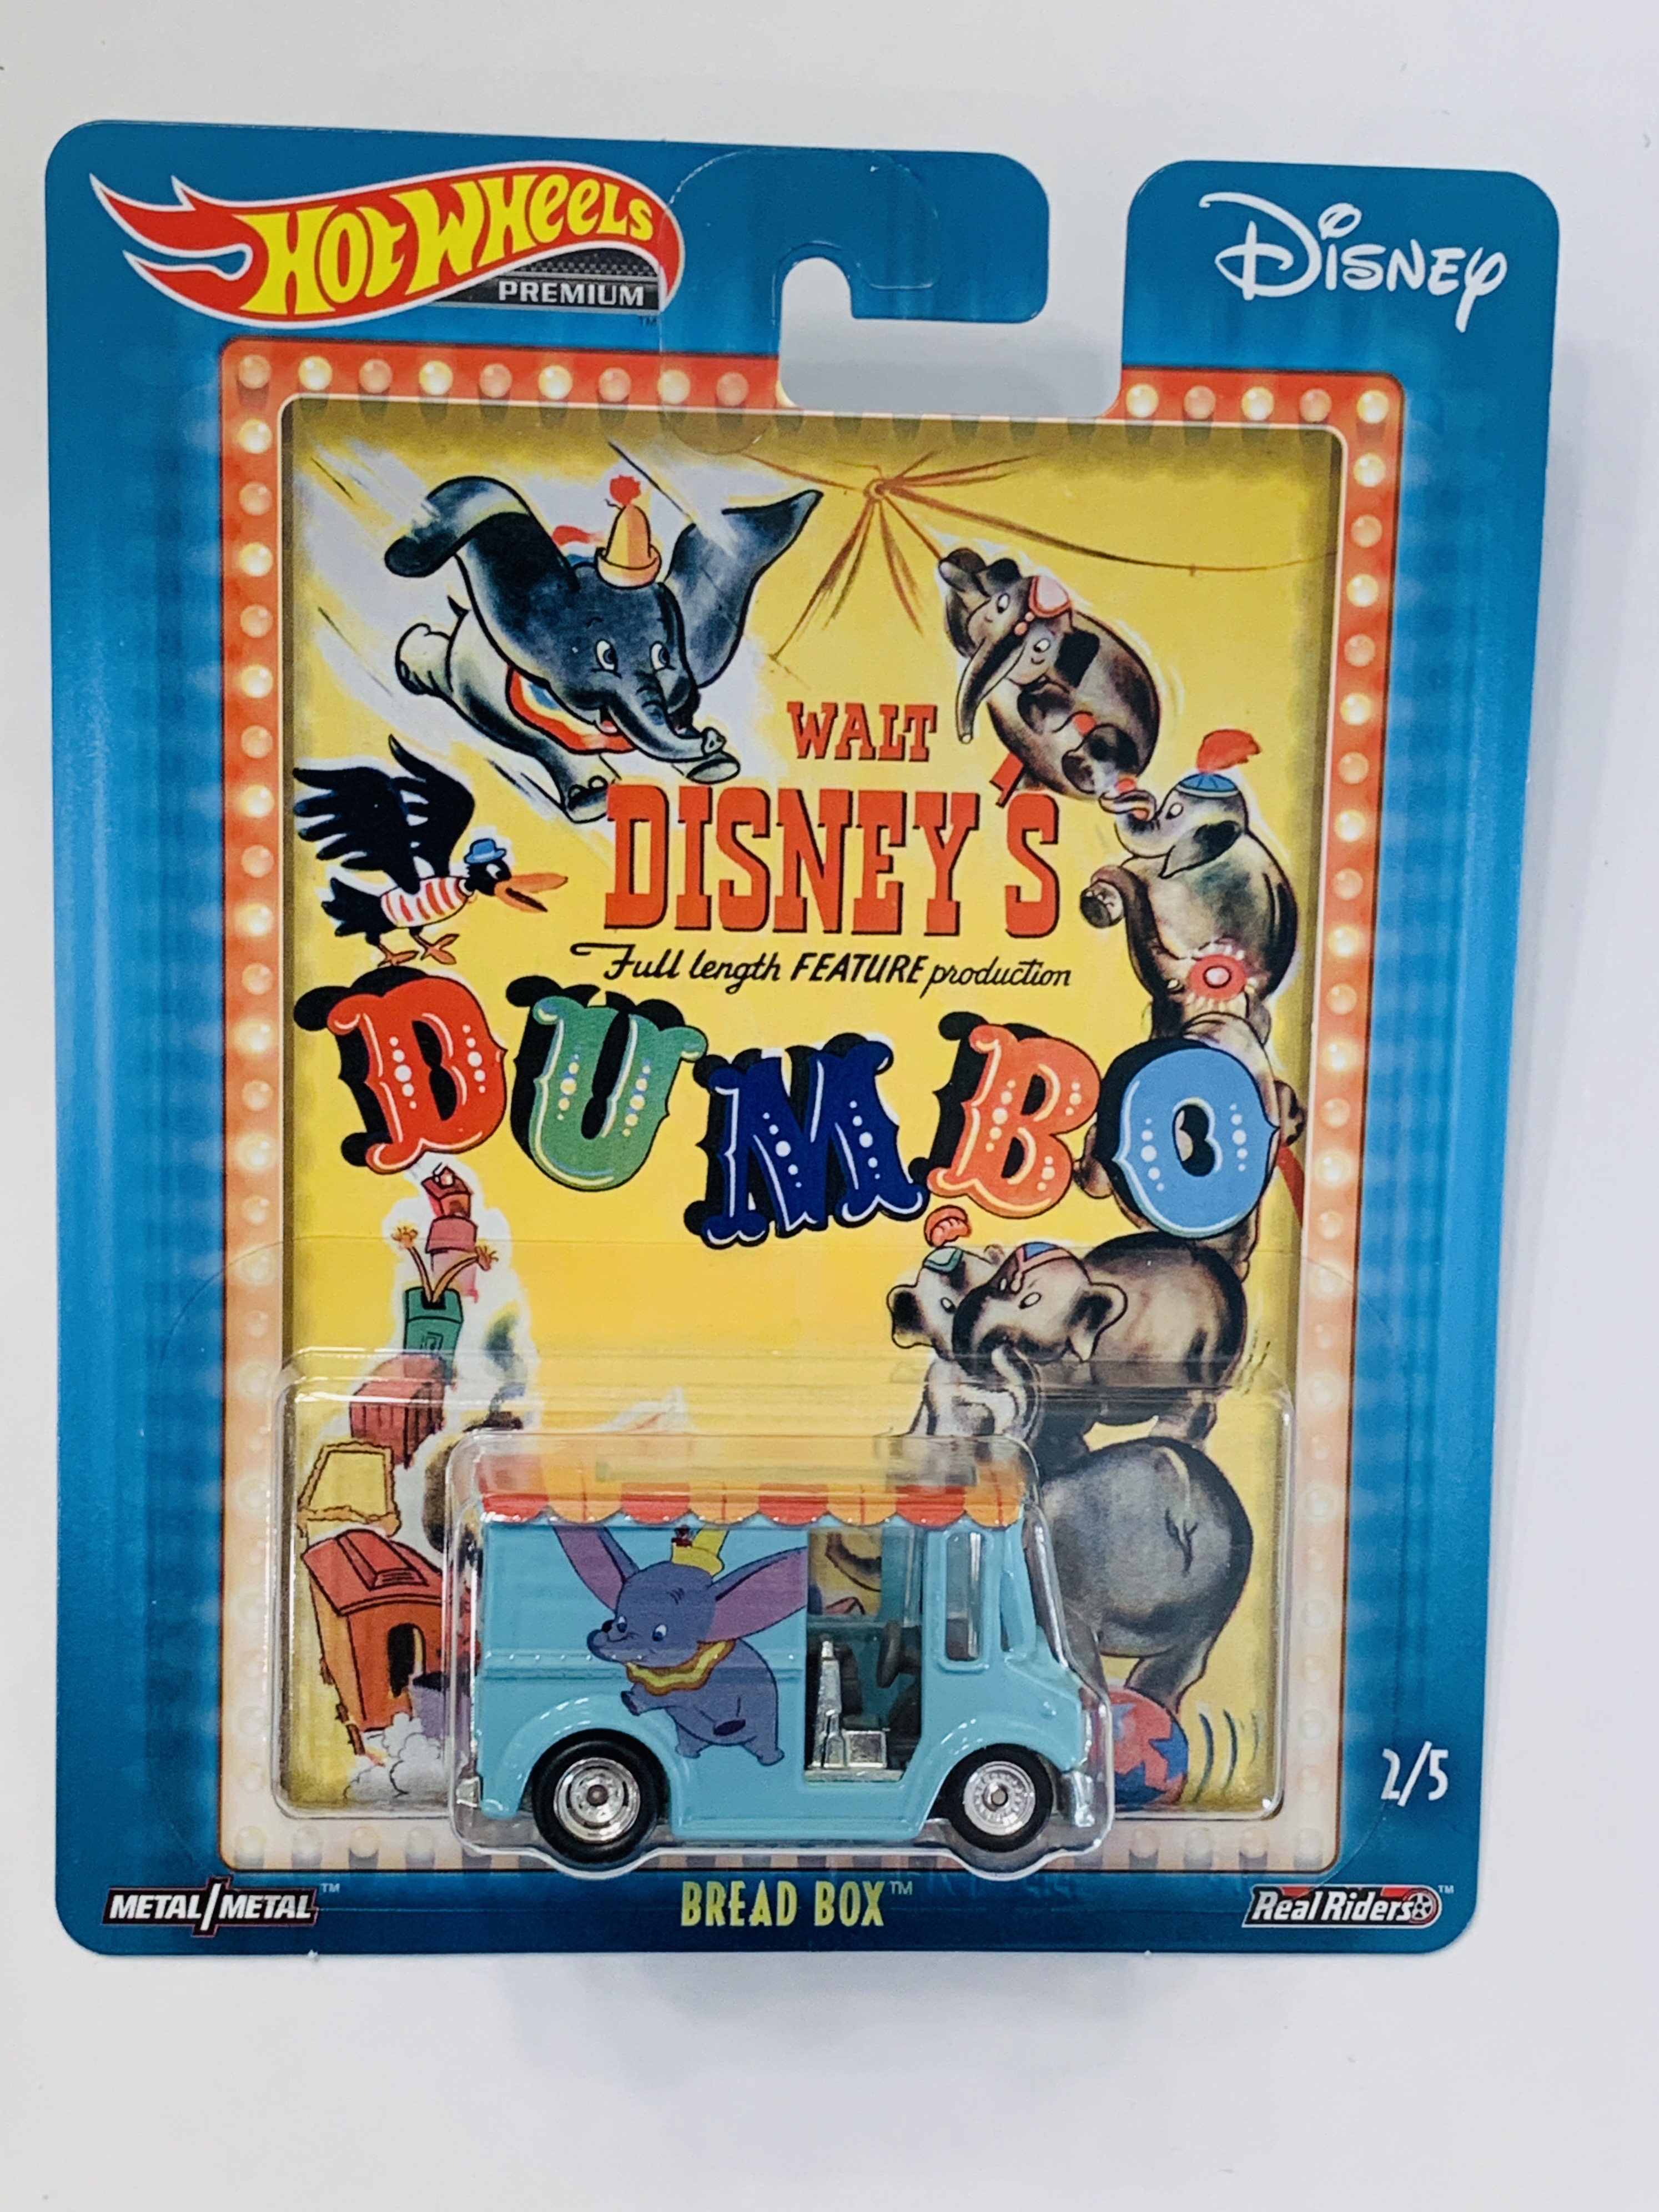 Hot Wheels Premium Walt Disney's Dumbo Bread Box